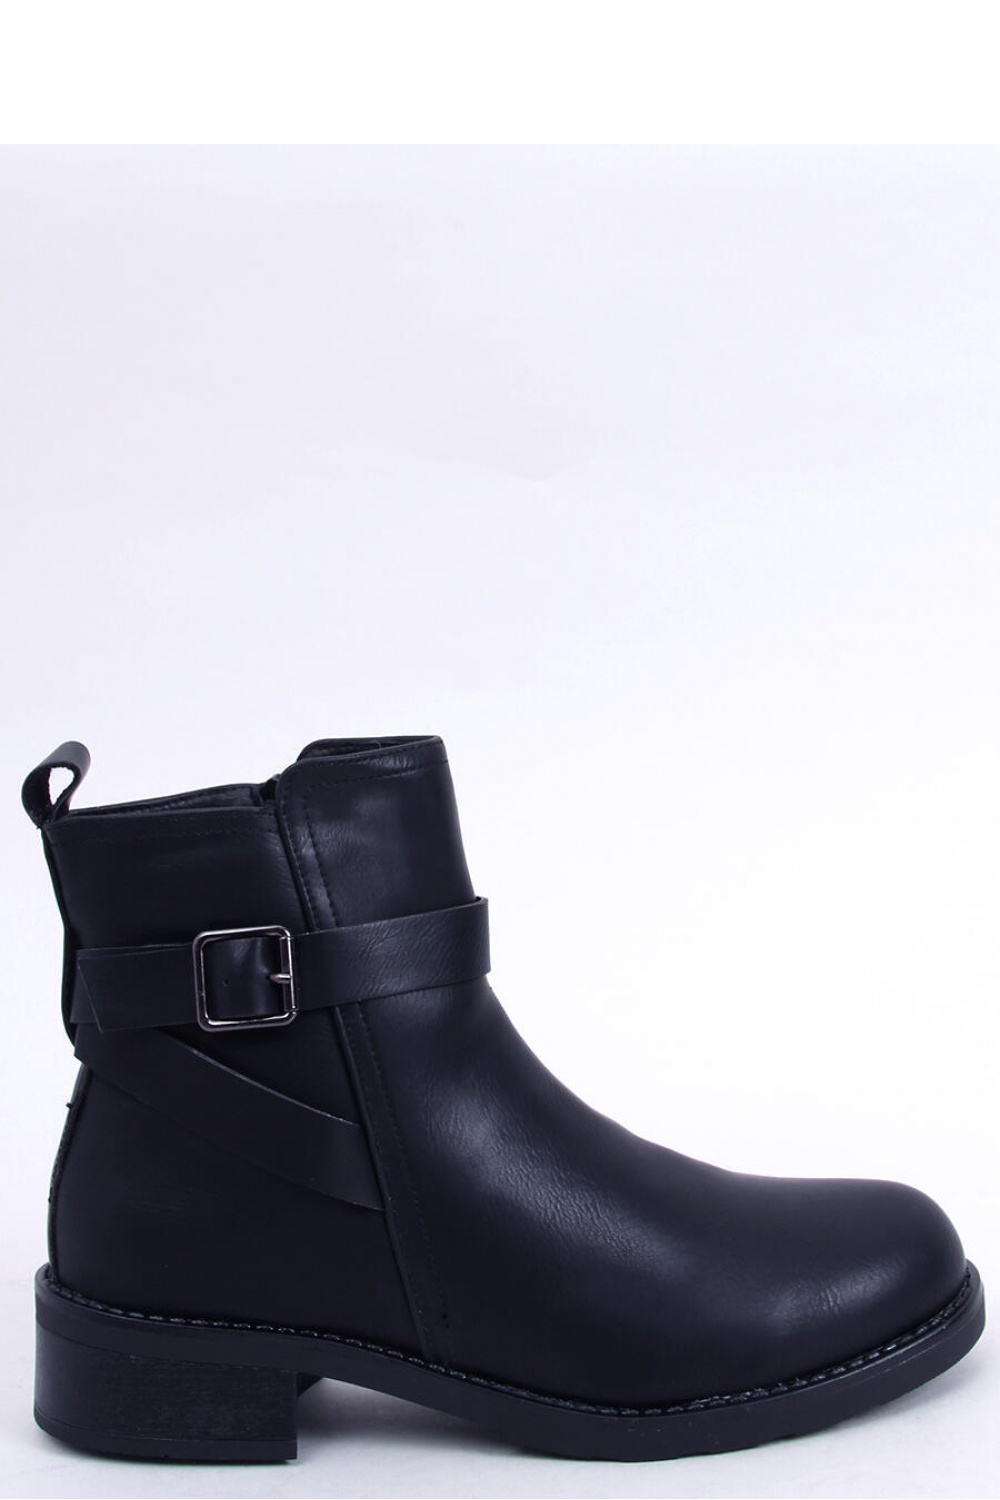  Jodhpur boot model 172855 Inello  black